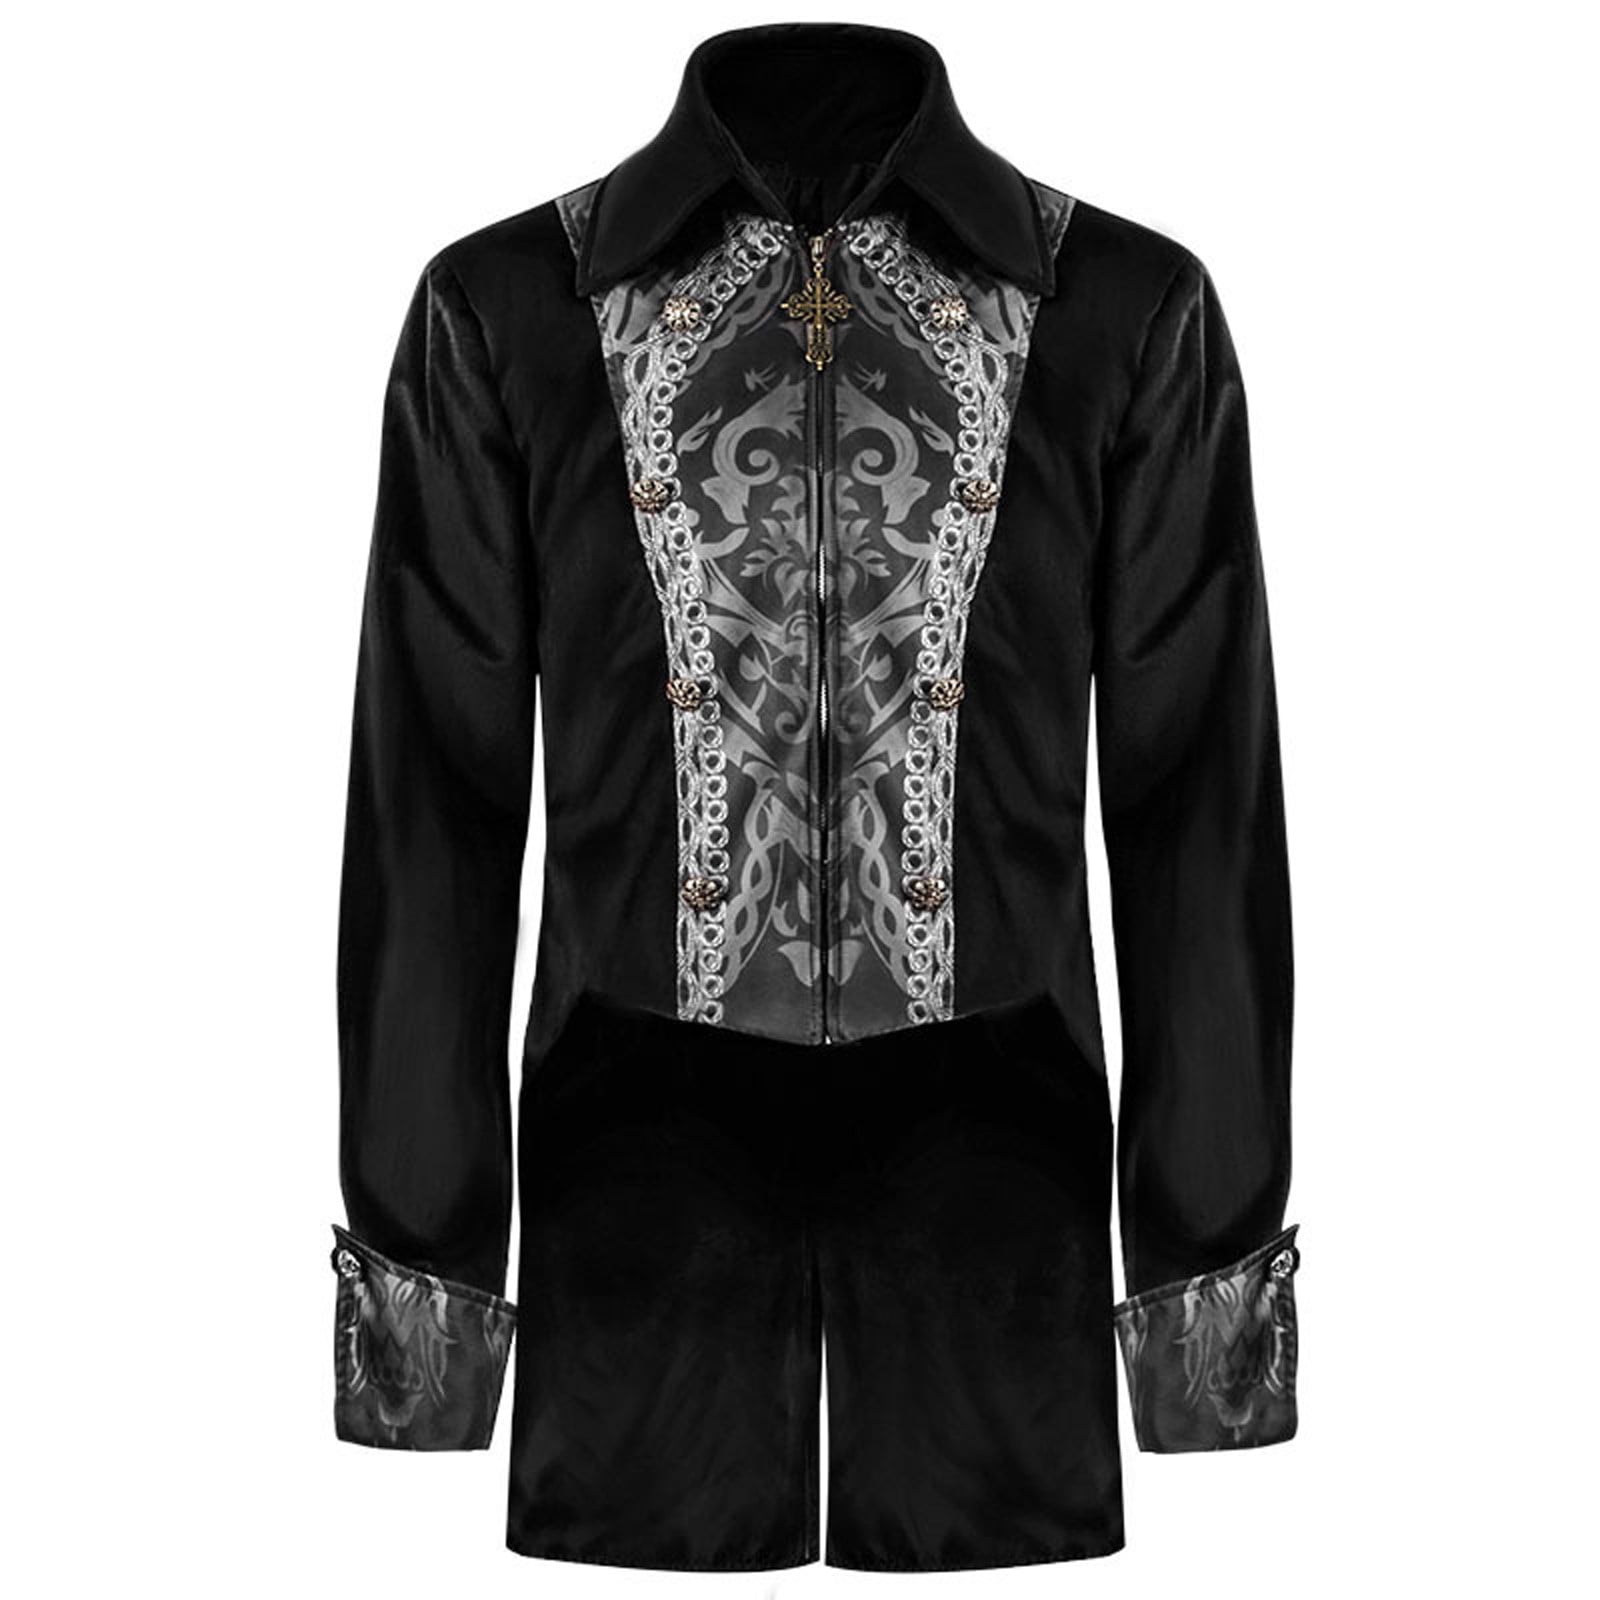 Odeerbi Mens Steampunk Tailcoat Gothic Medieval Jacket Frock Uniform ...